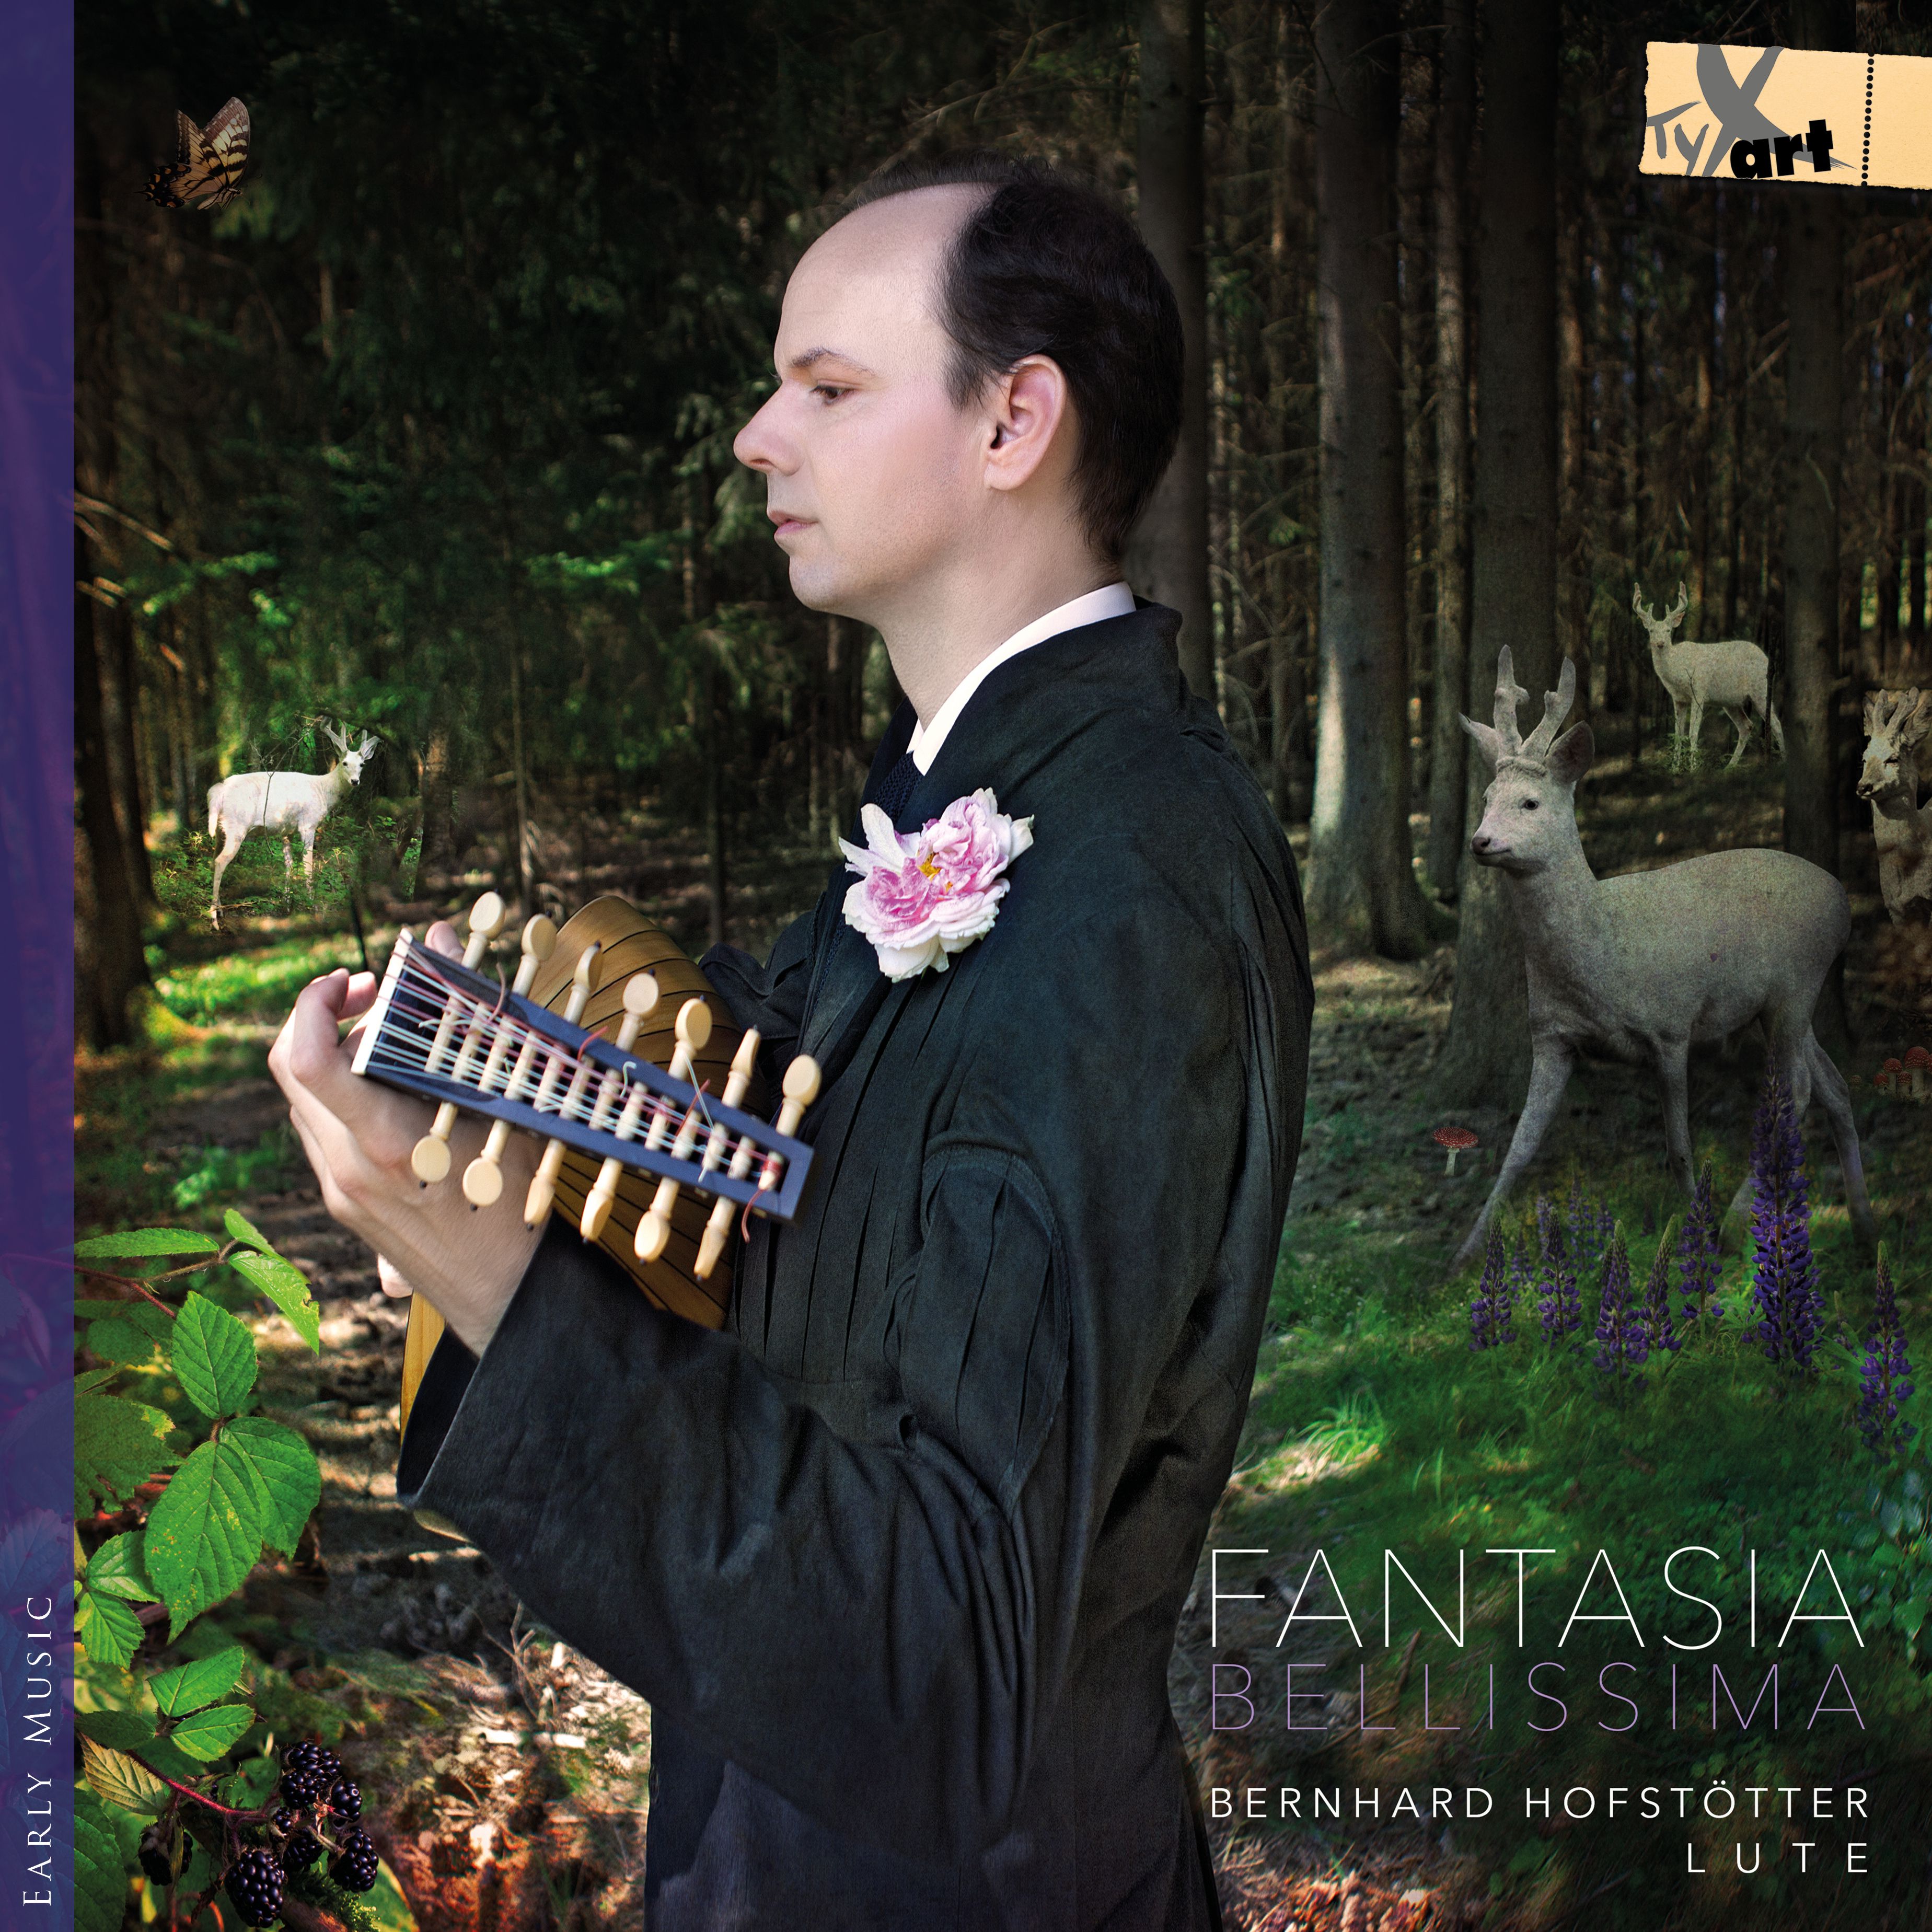 Fantasia Bellissima – The Lviv Lute Tablature - Bernhard Hofstoetter